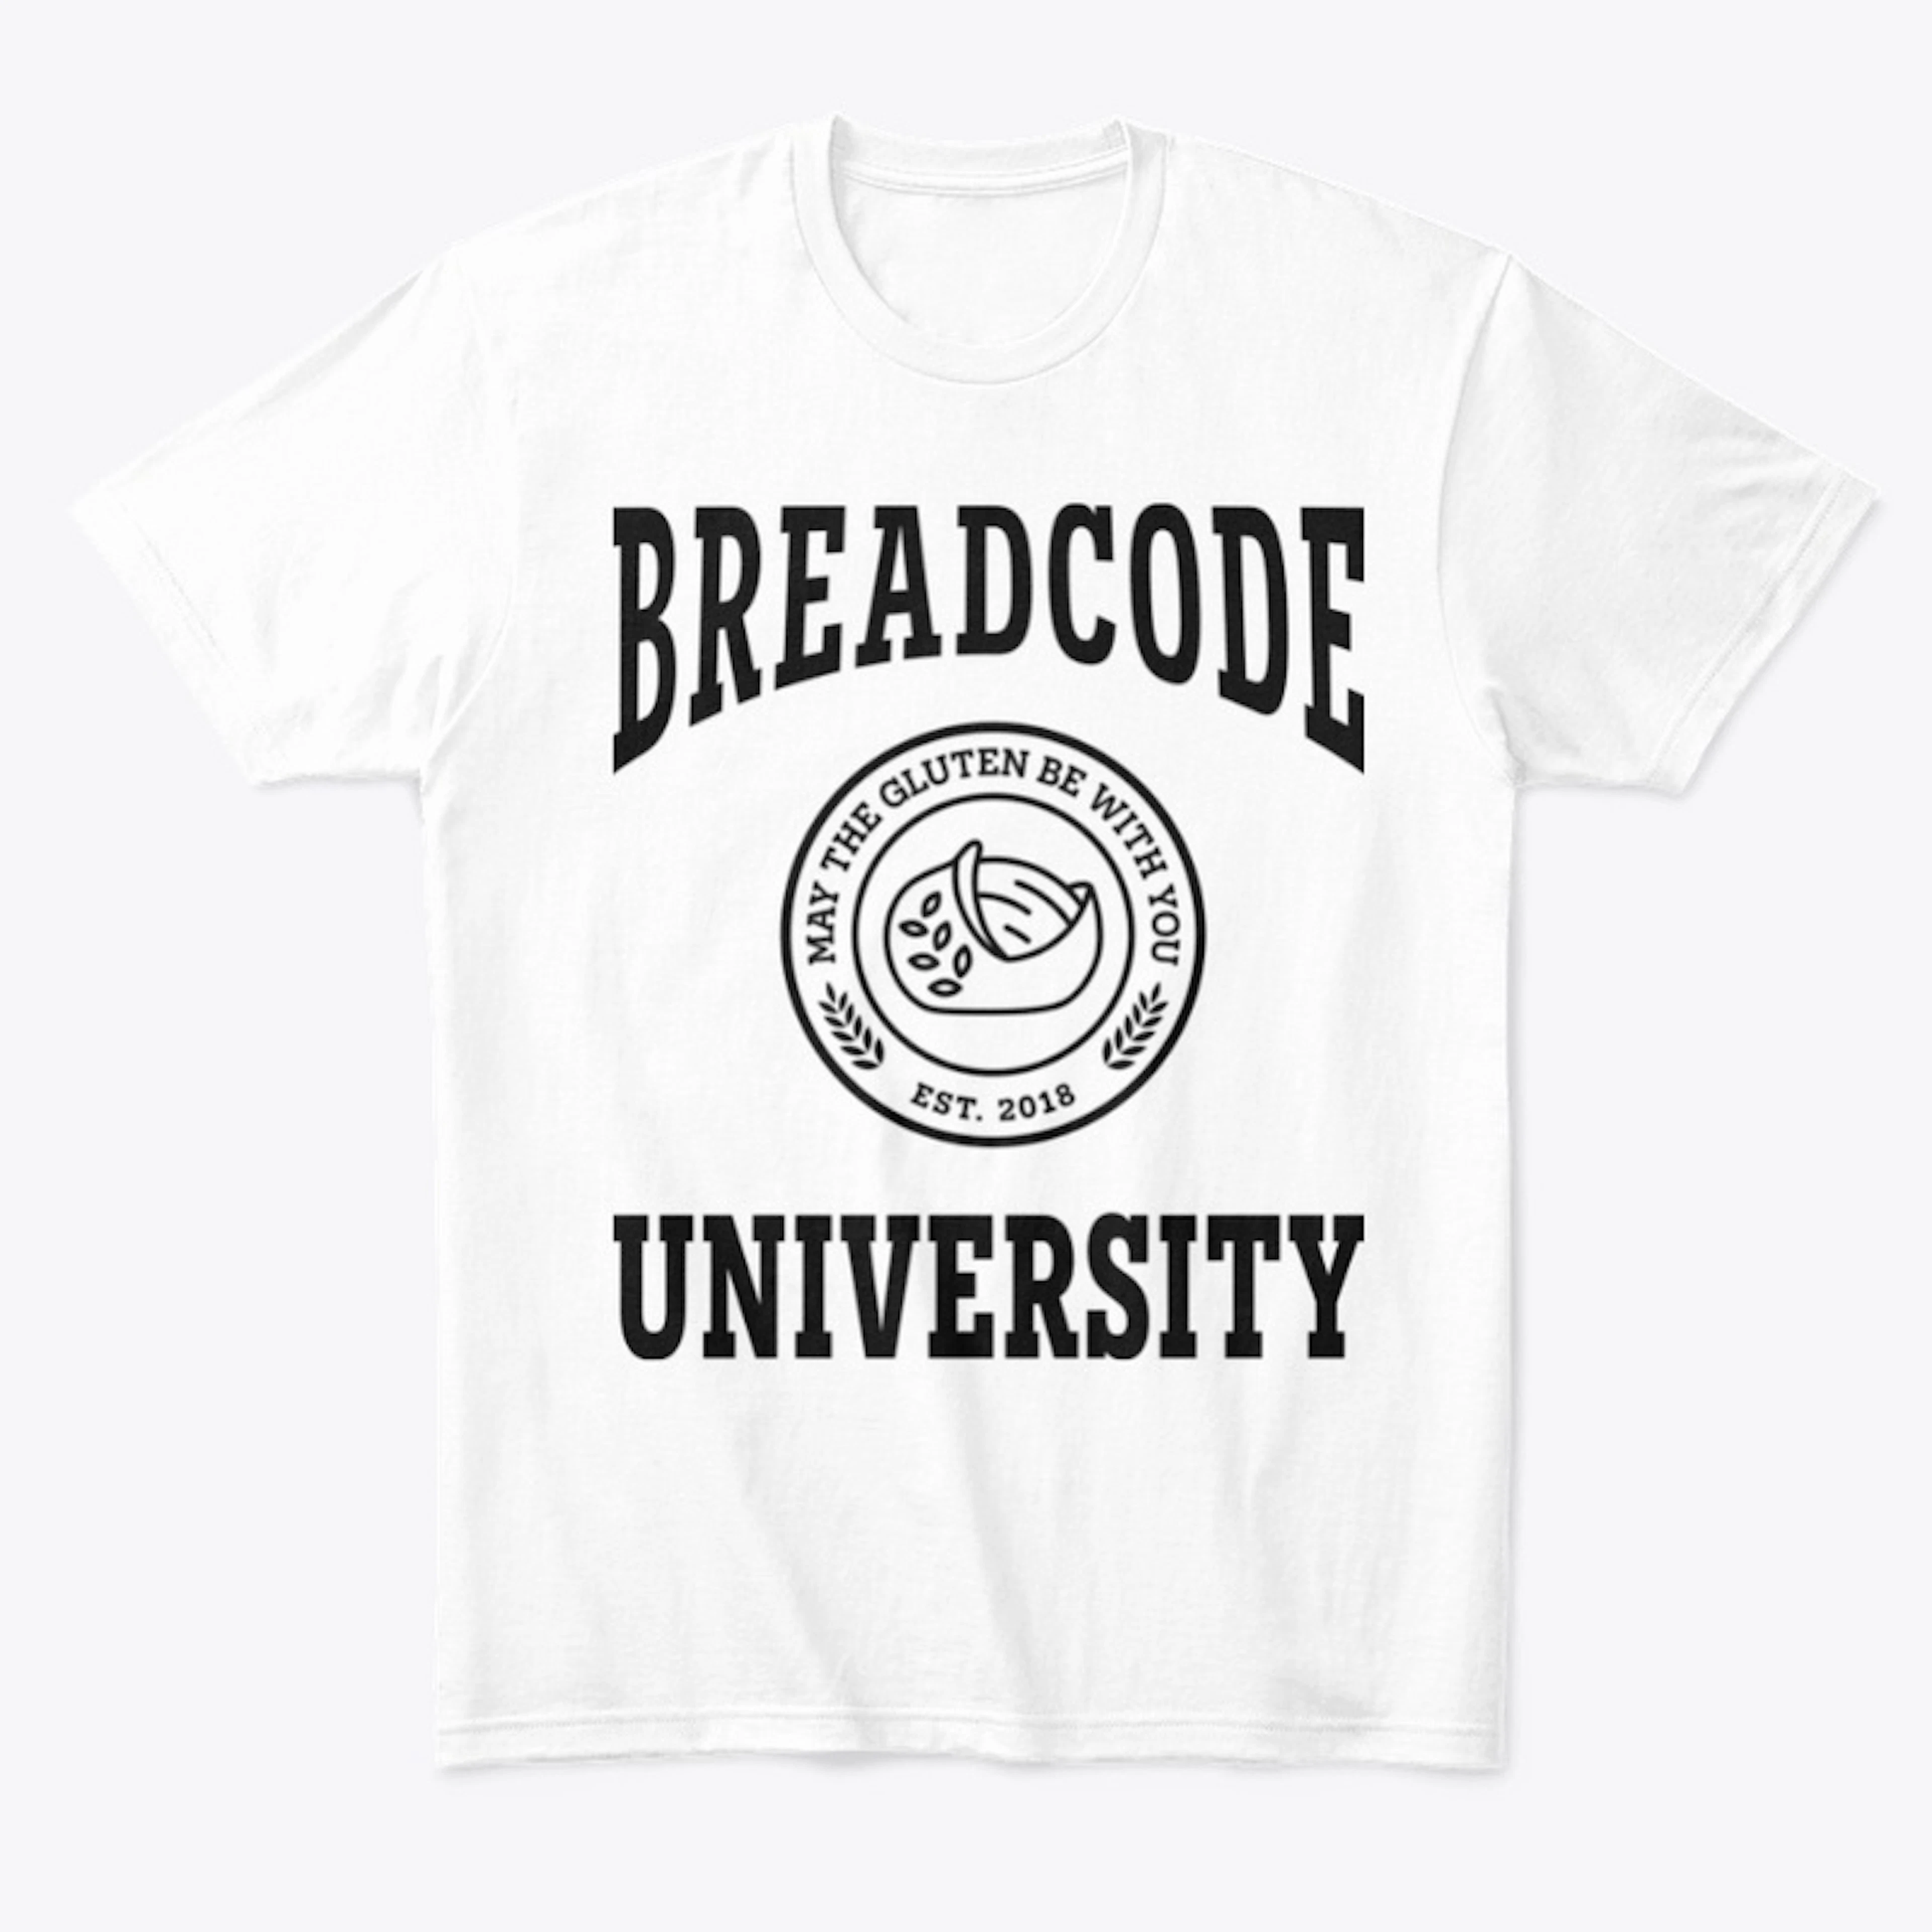 Bread Code University